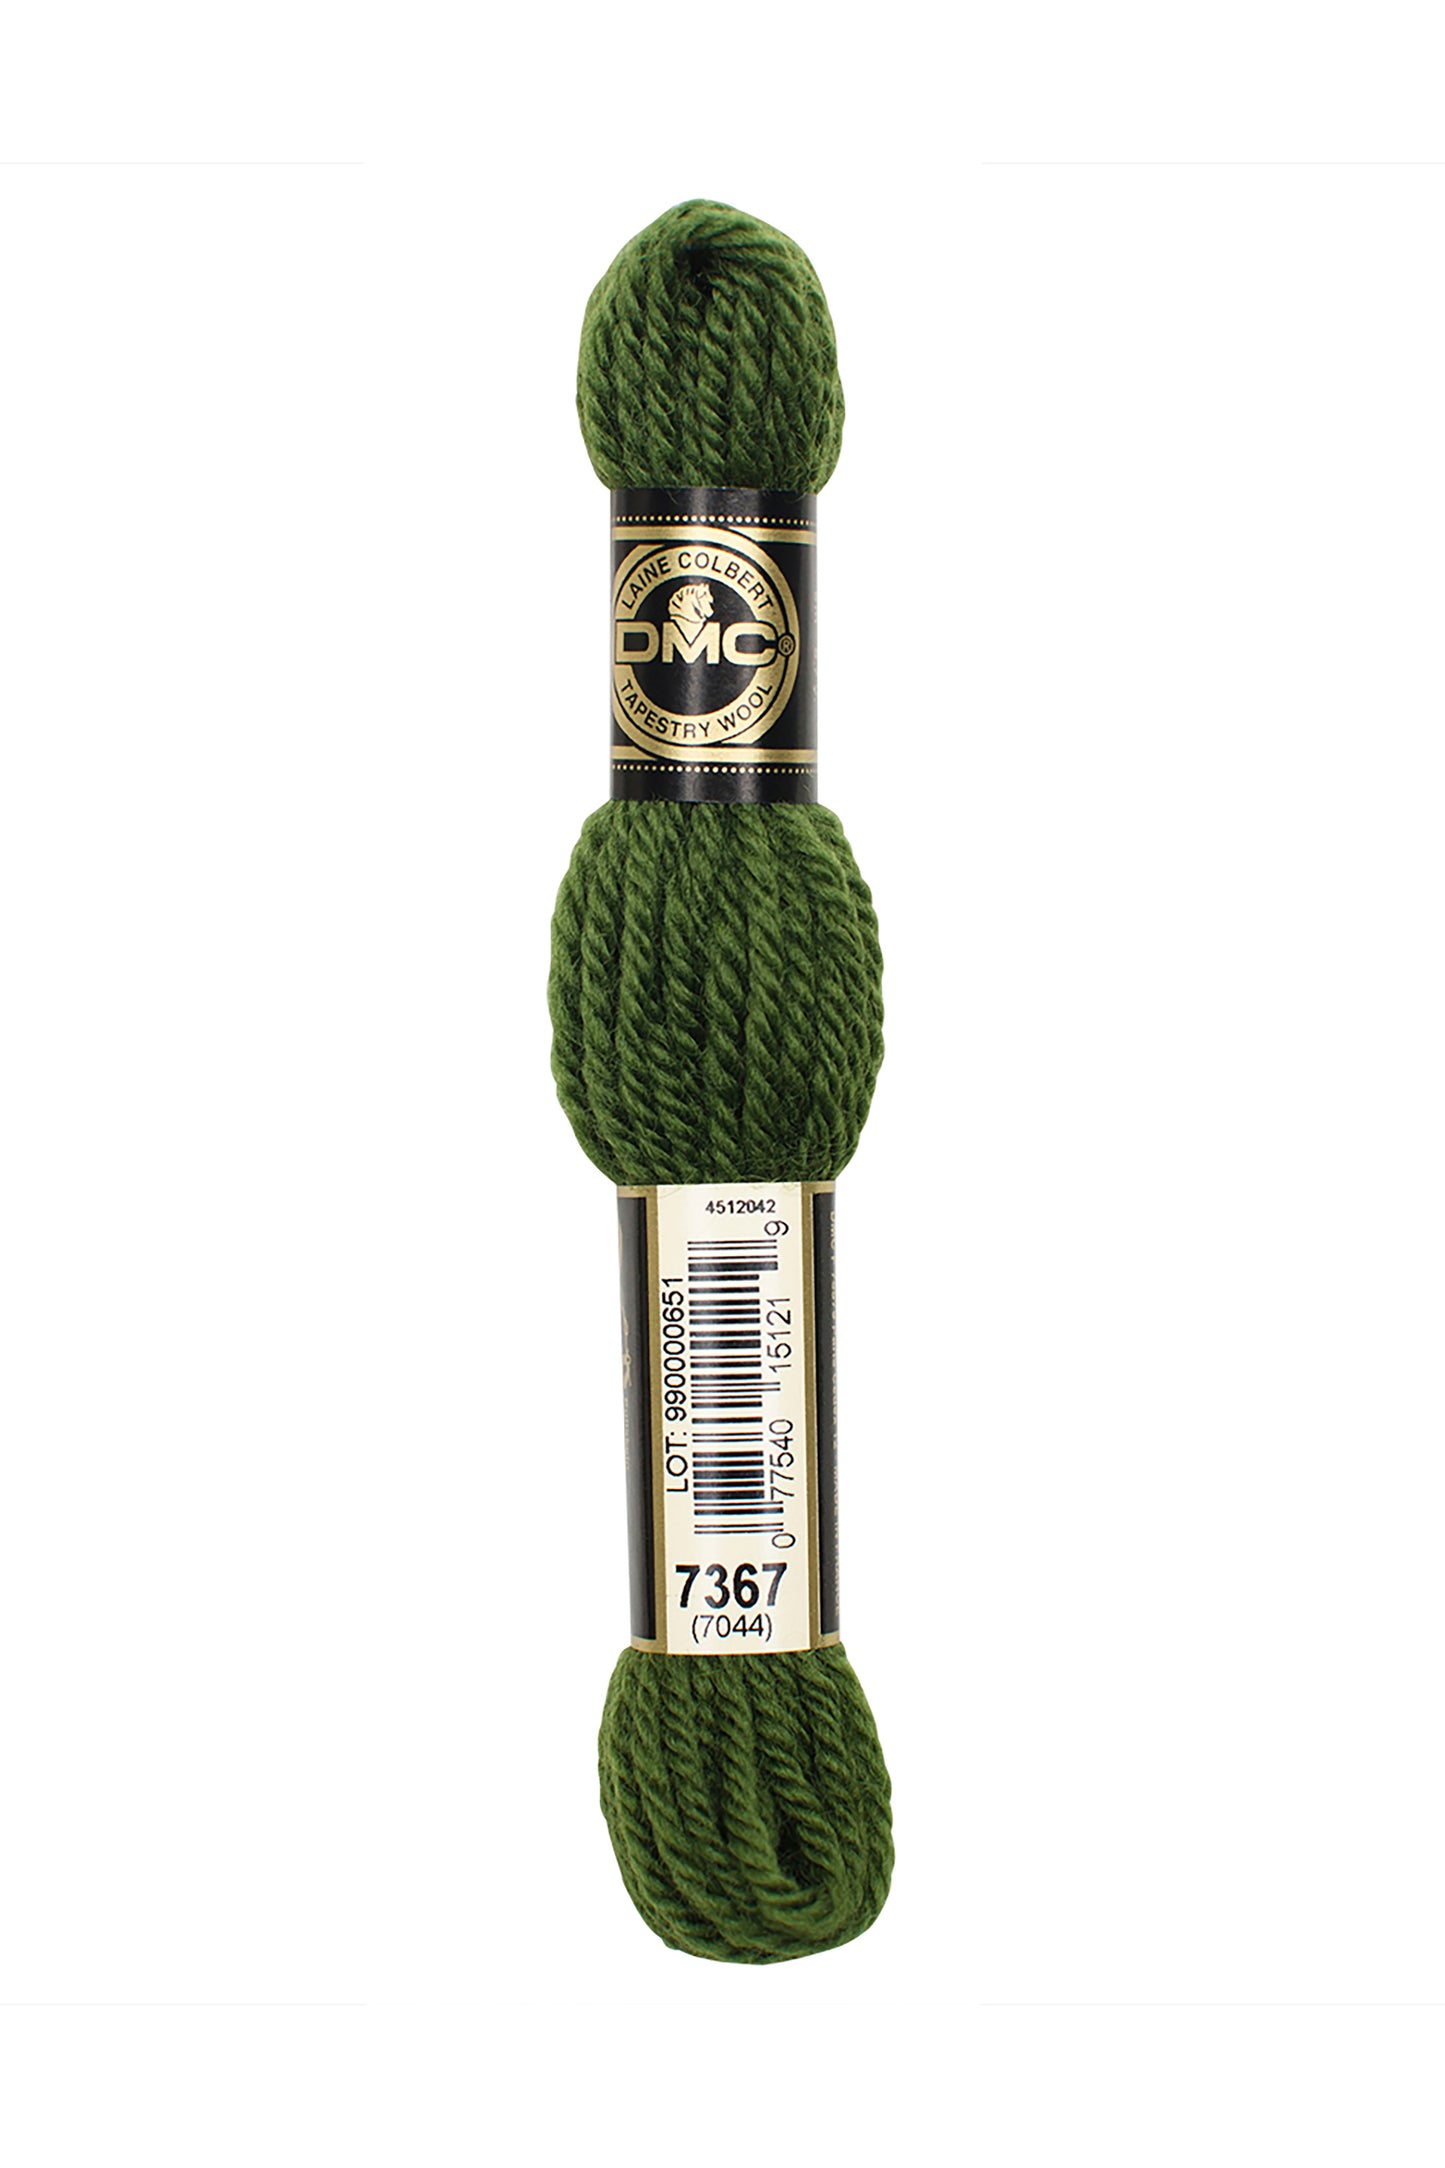 7367 – DMC Tapestry Wool